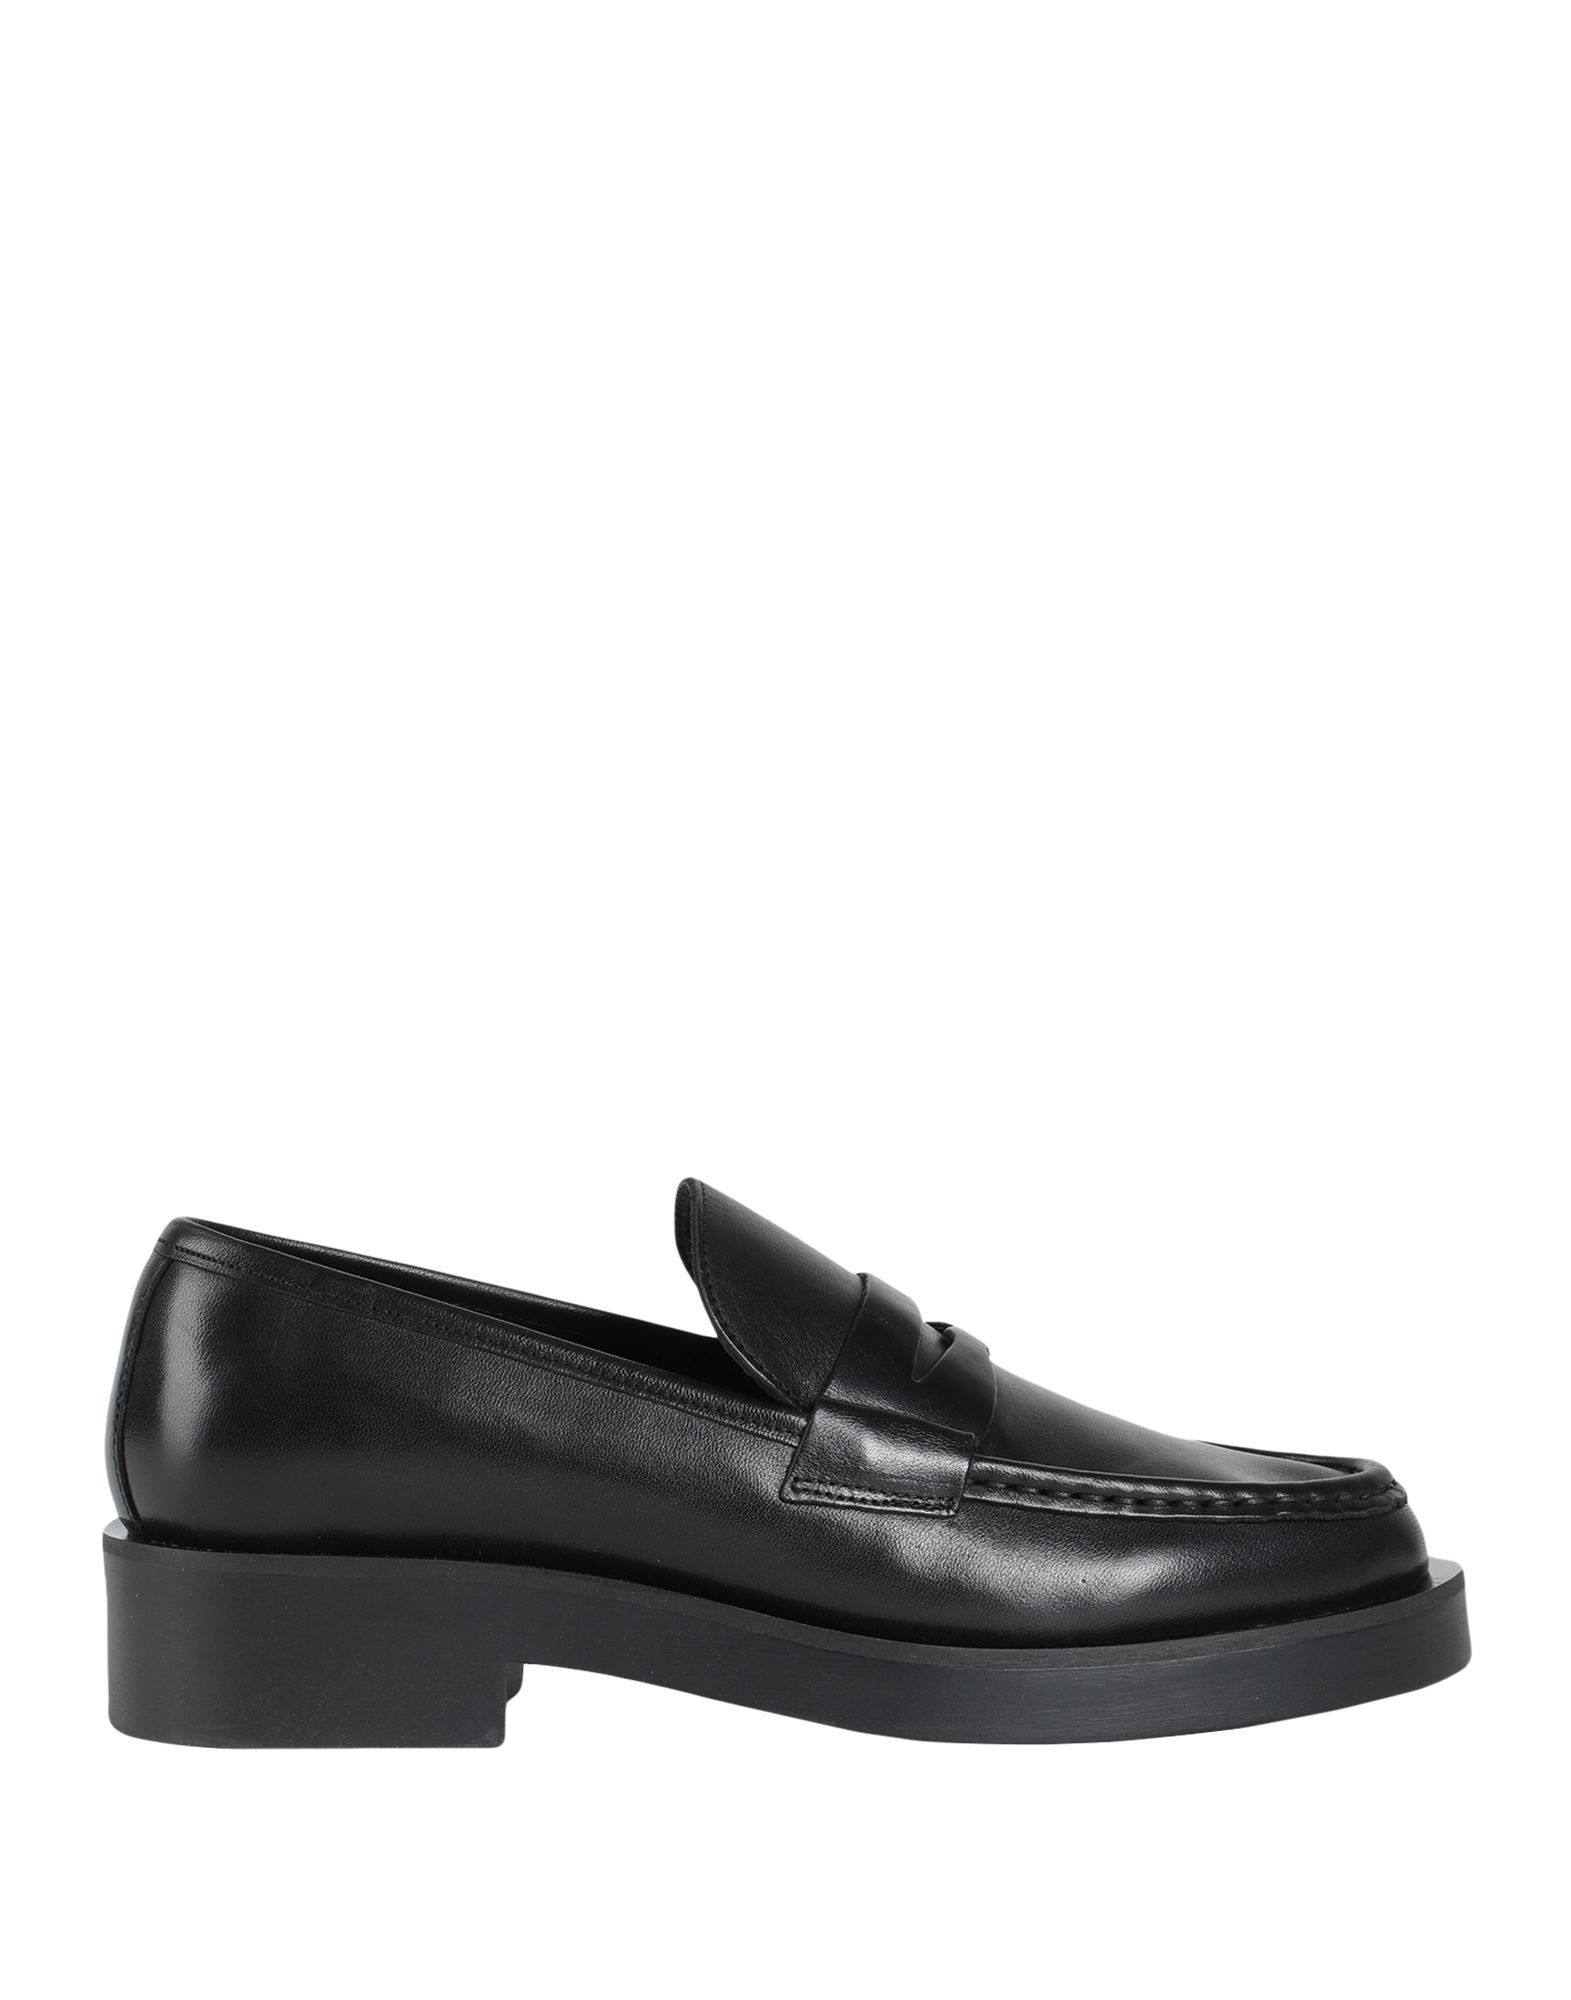 Shop Arket Woman Loafers Black Size 8 Soft Leather